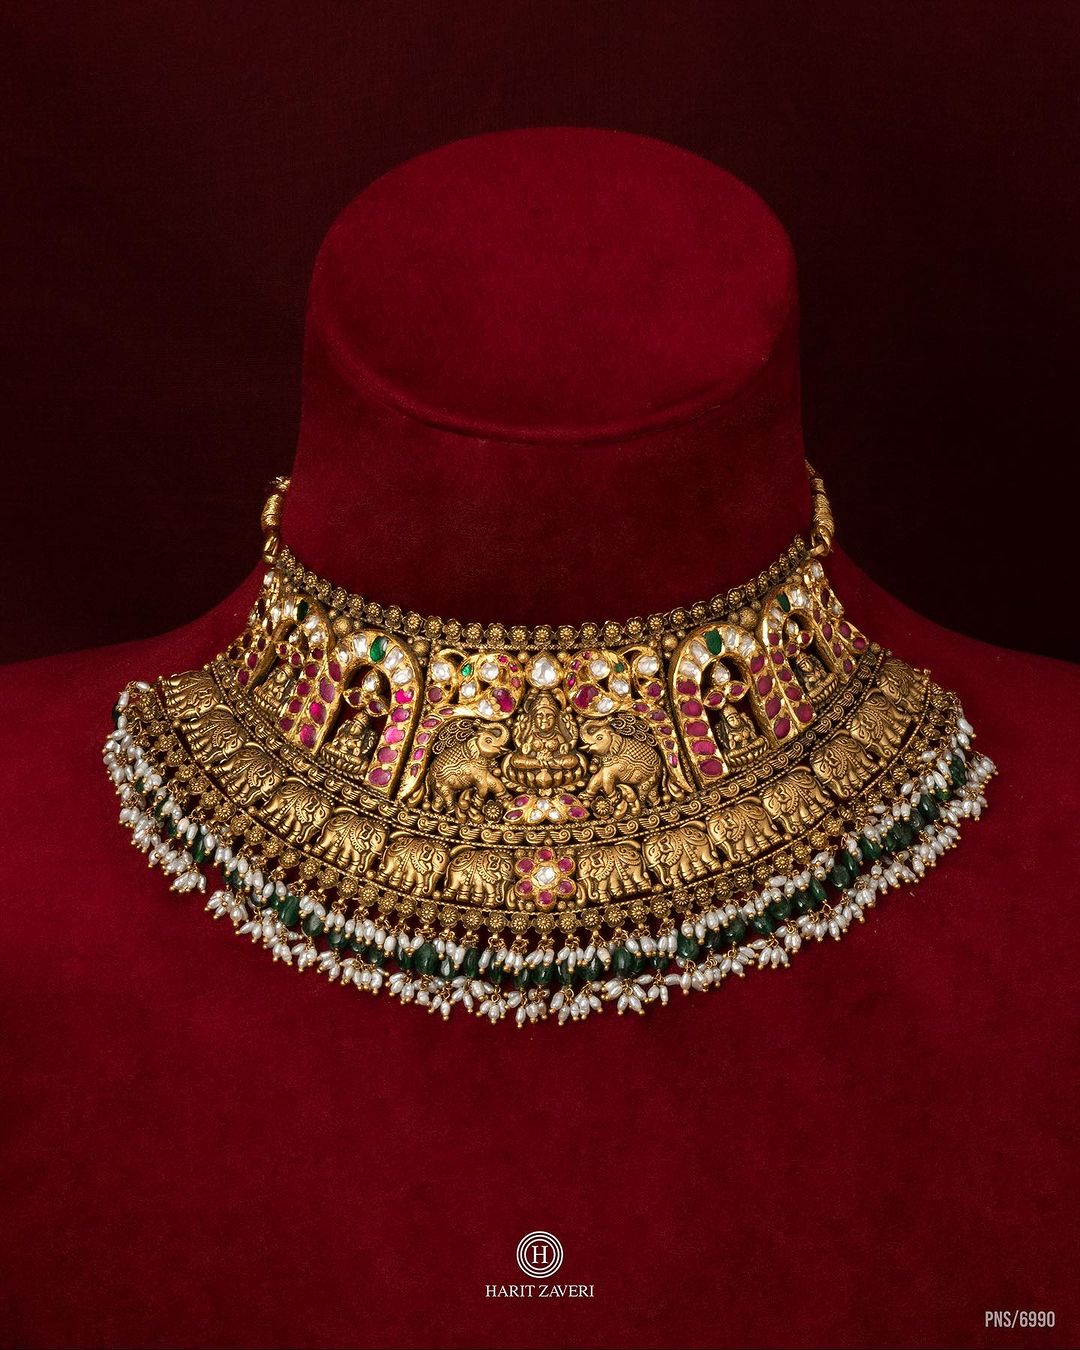 Antique Gold Choker From 'Harizaeri Jewellers'